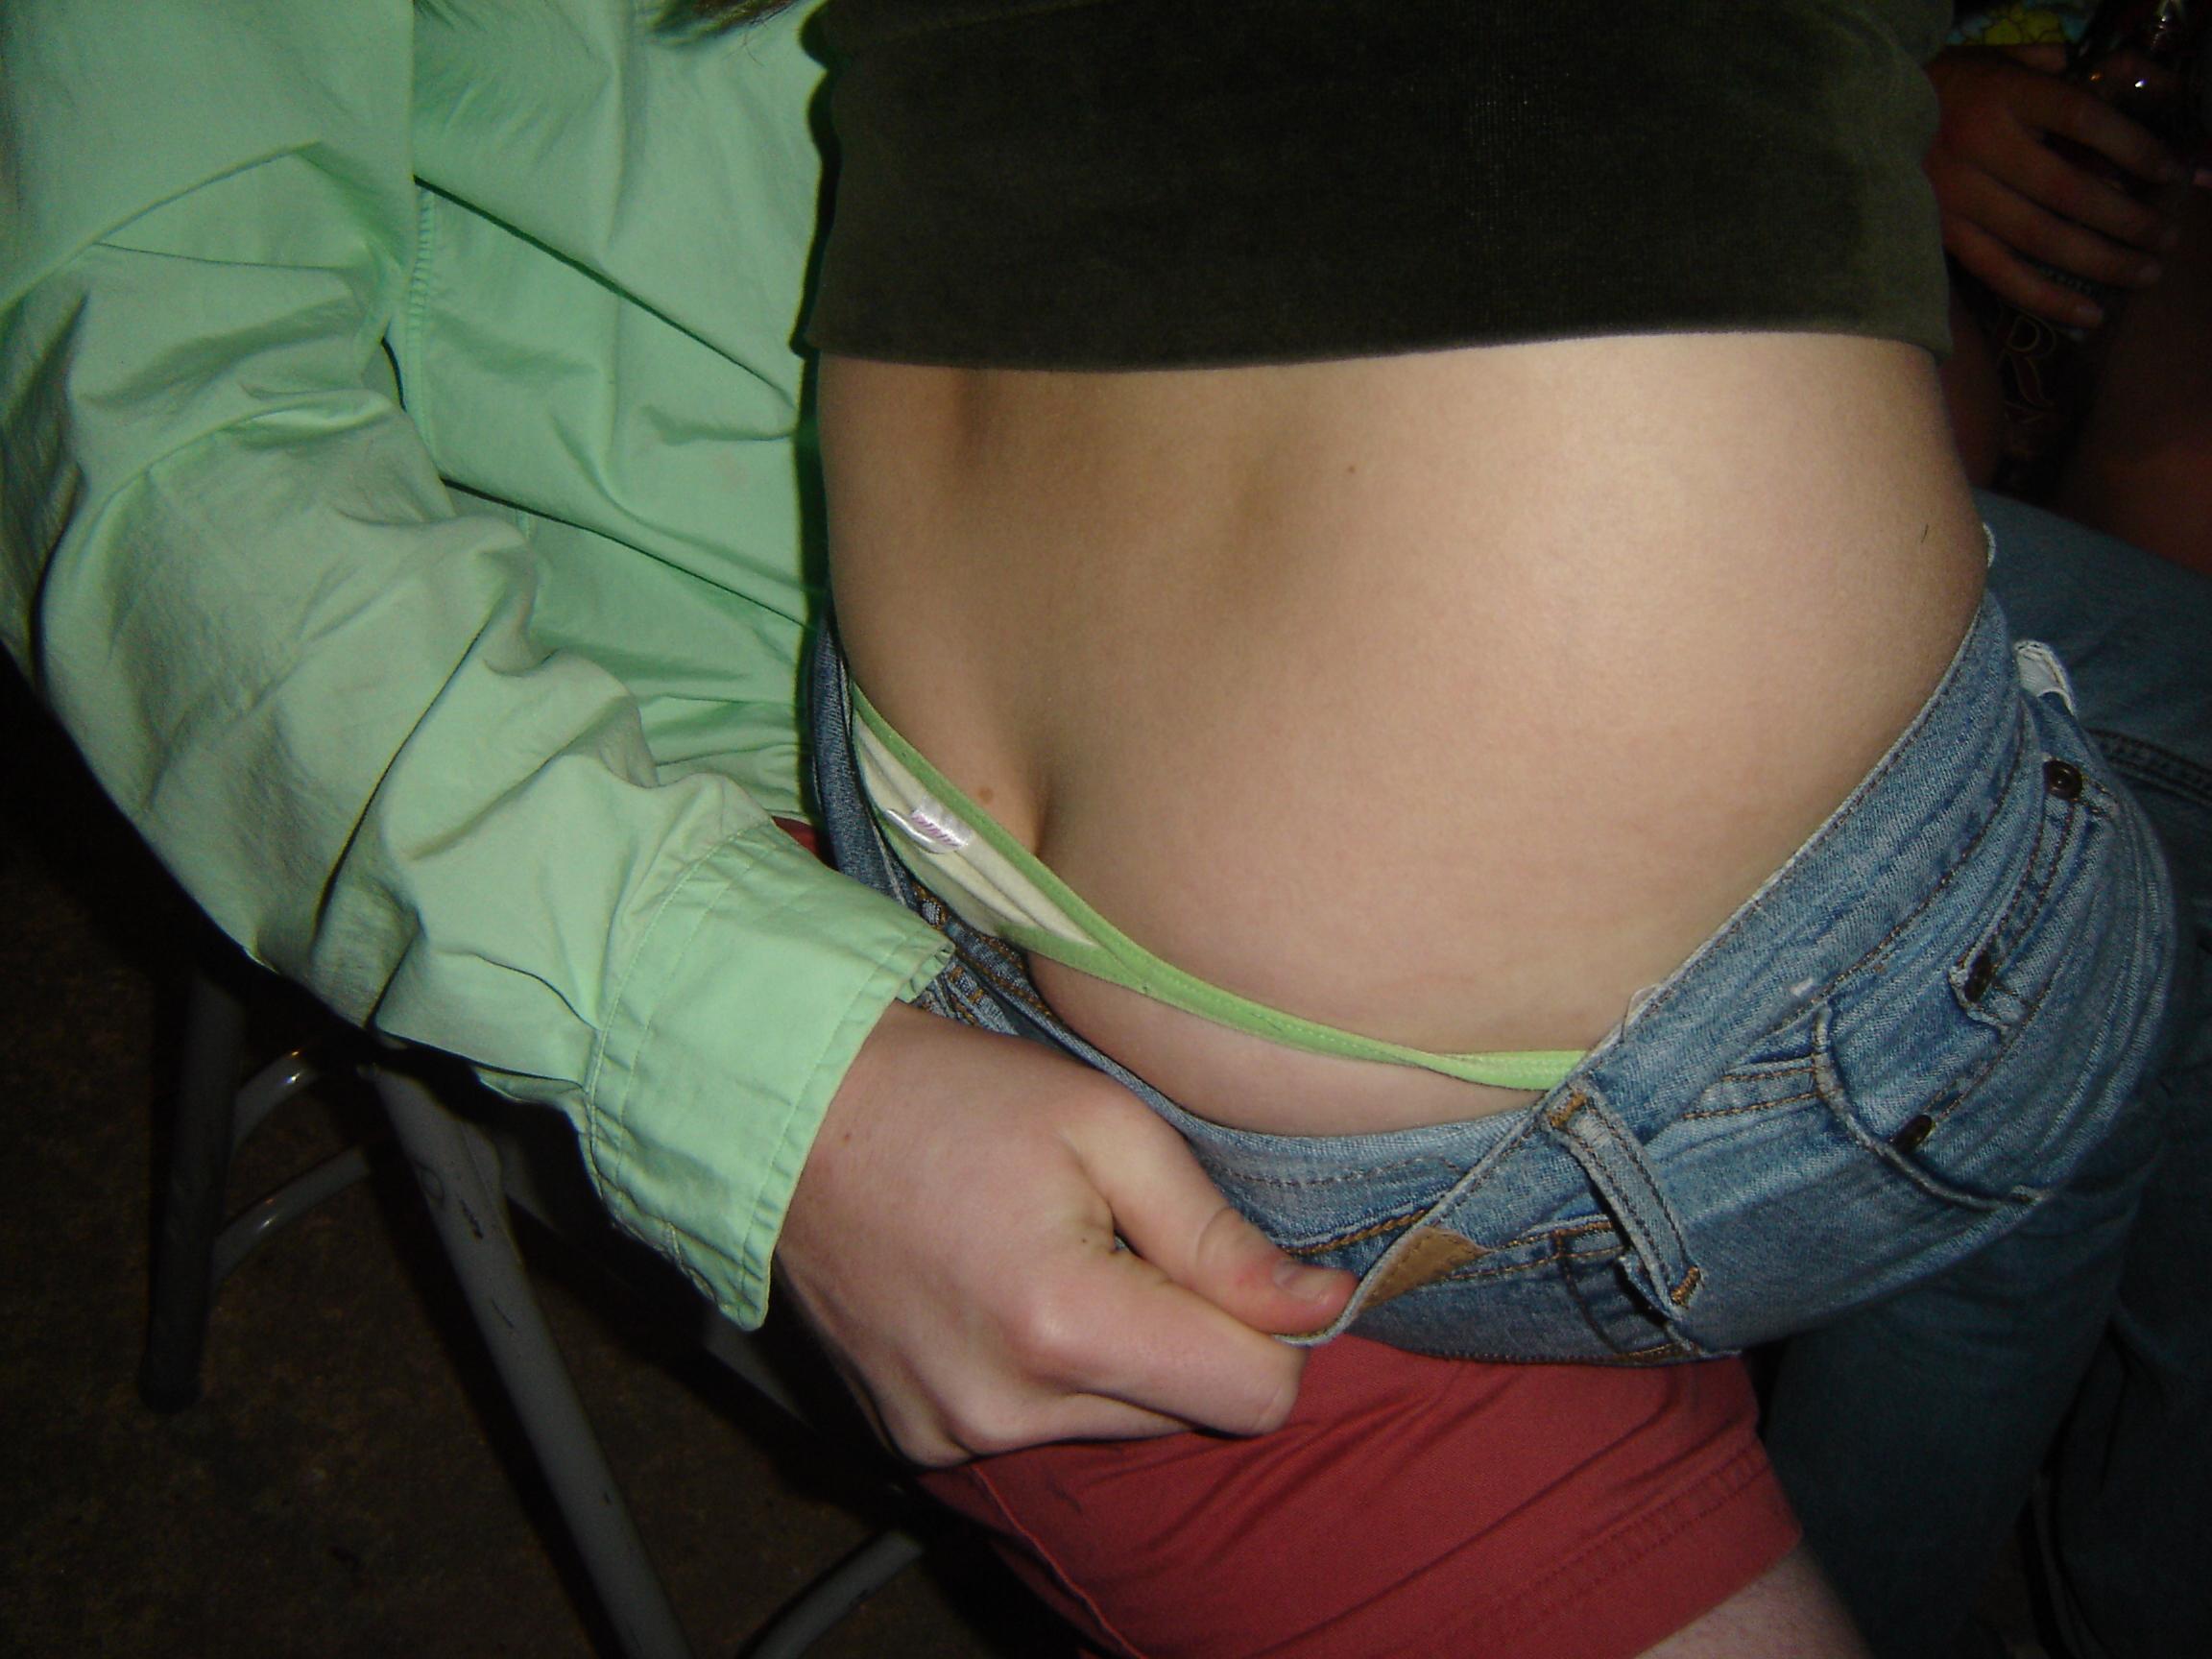 Voyeur cams caught girls-next-door showing off their thongs photo